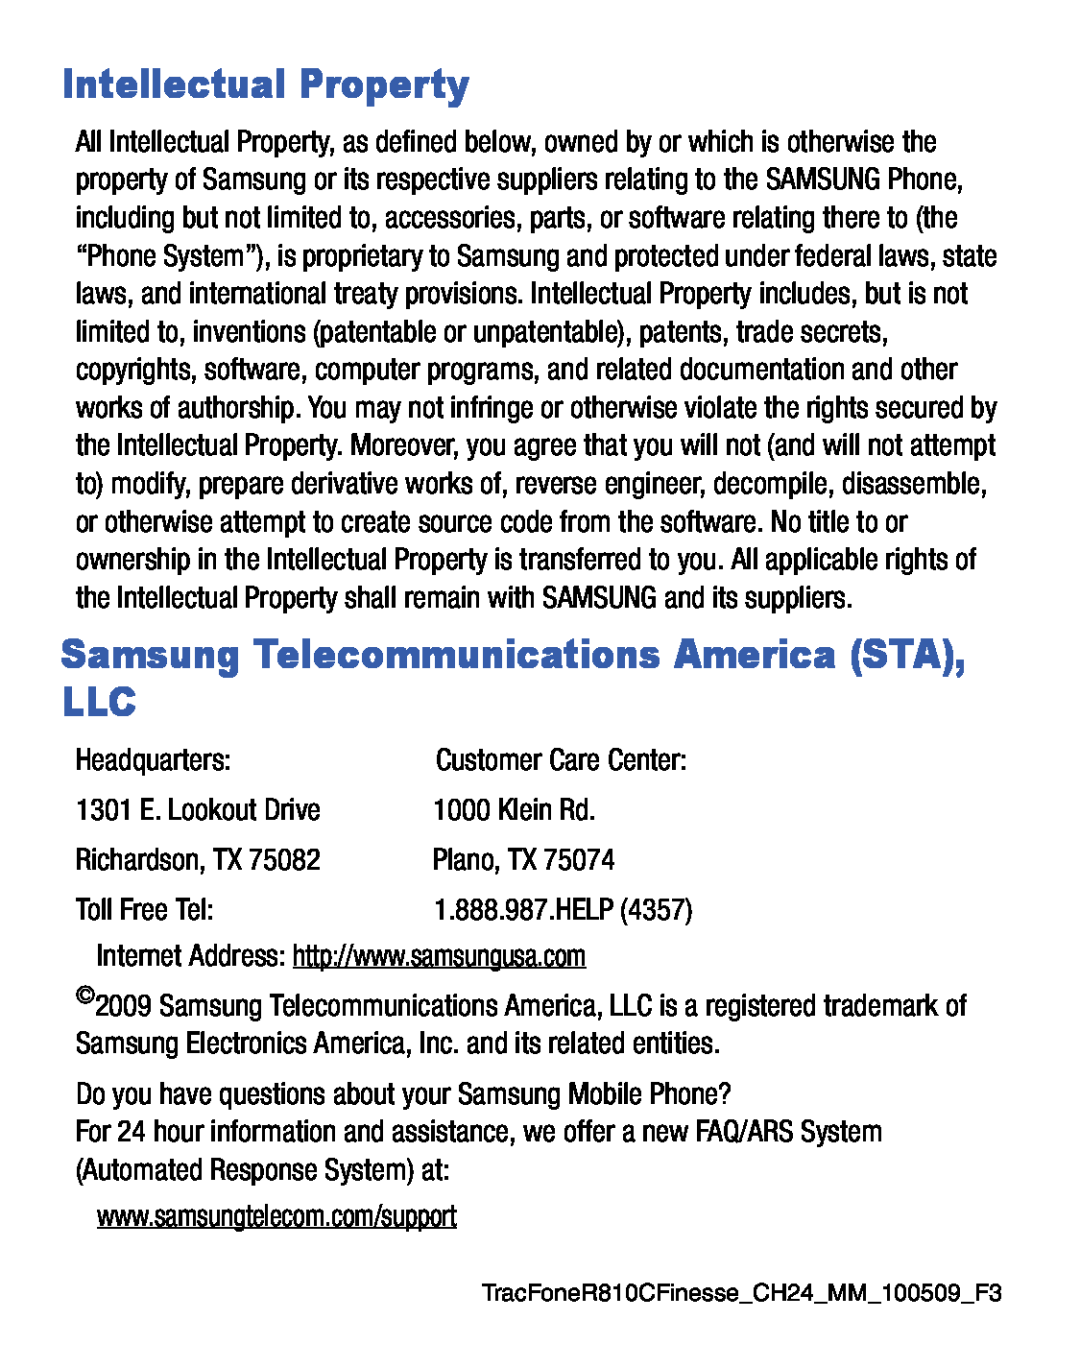 Samsung GH68-25119A Intellectual Property, Samsung Telecommunications America STA LLC, Headquarters, 1301 E. Lookout Drive 